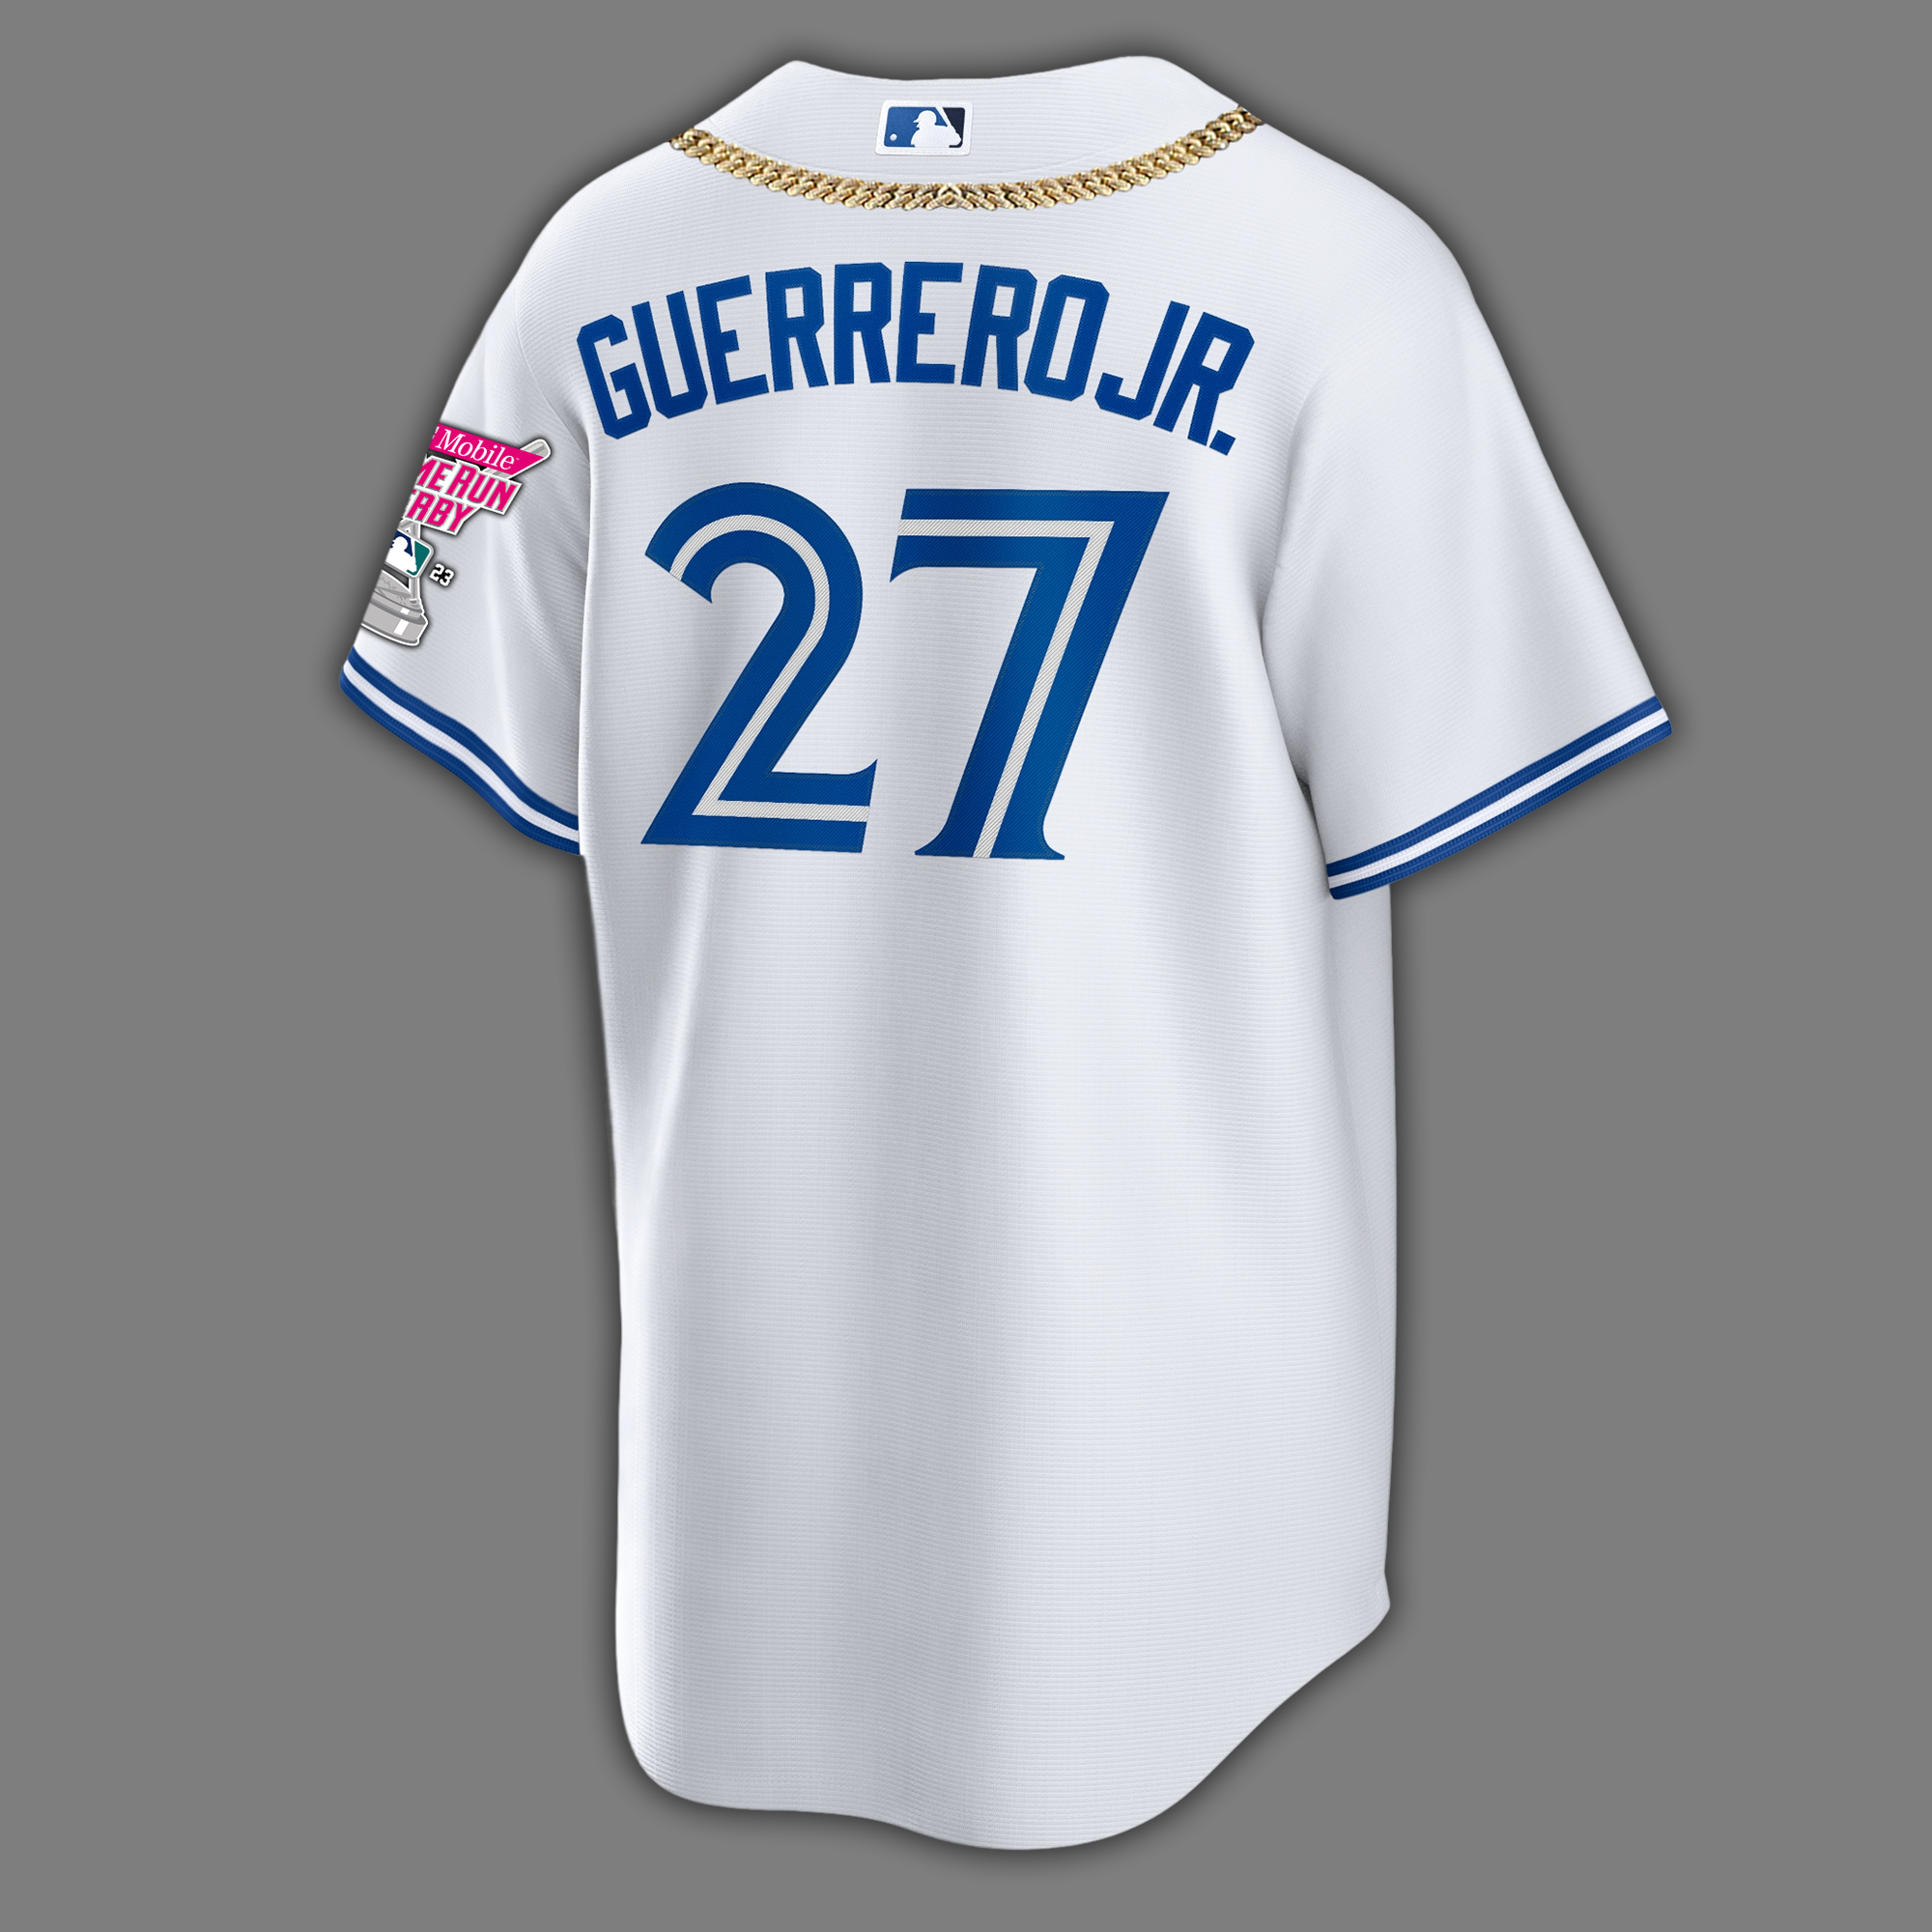 Vladimir Guerrero Jr Shirt, Home Run Derby 2023 Shirt - Trendingnowe